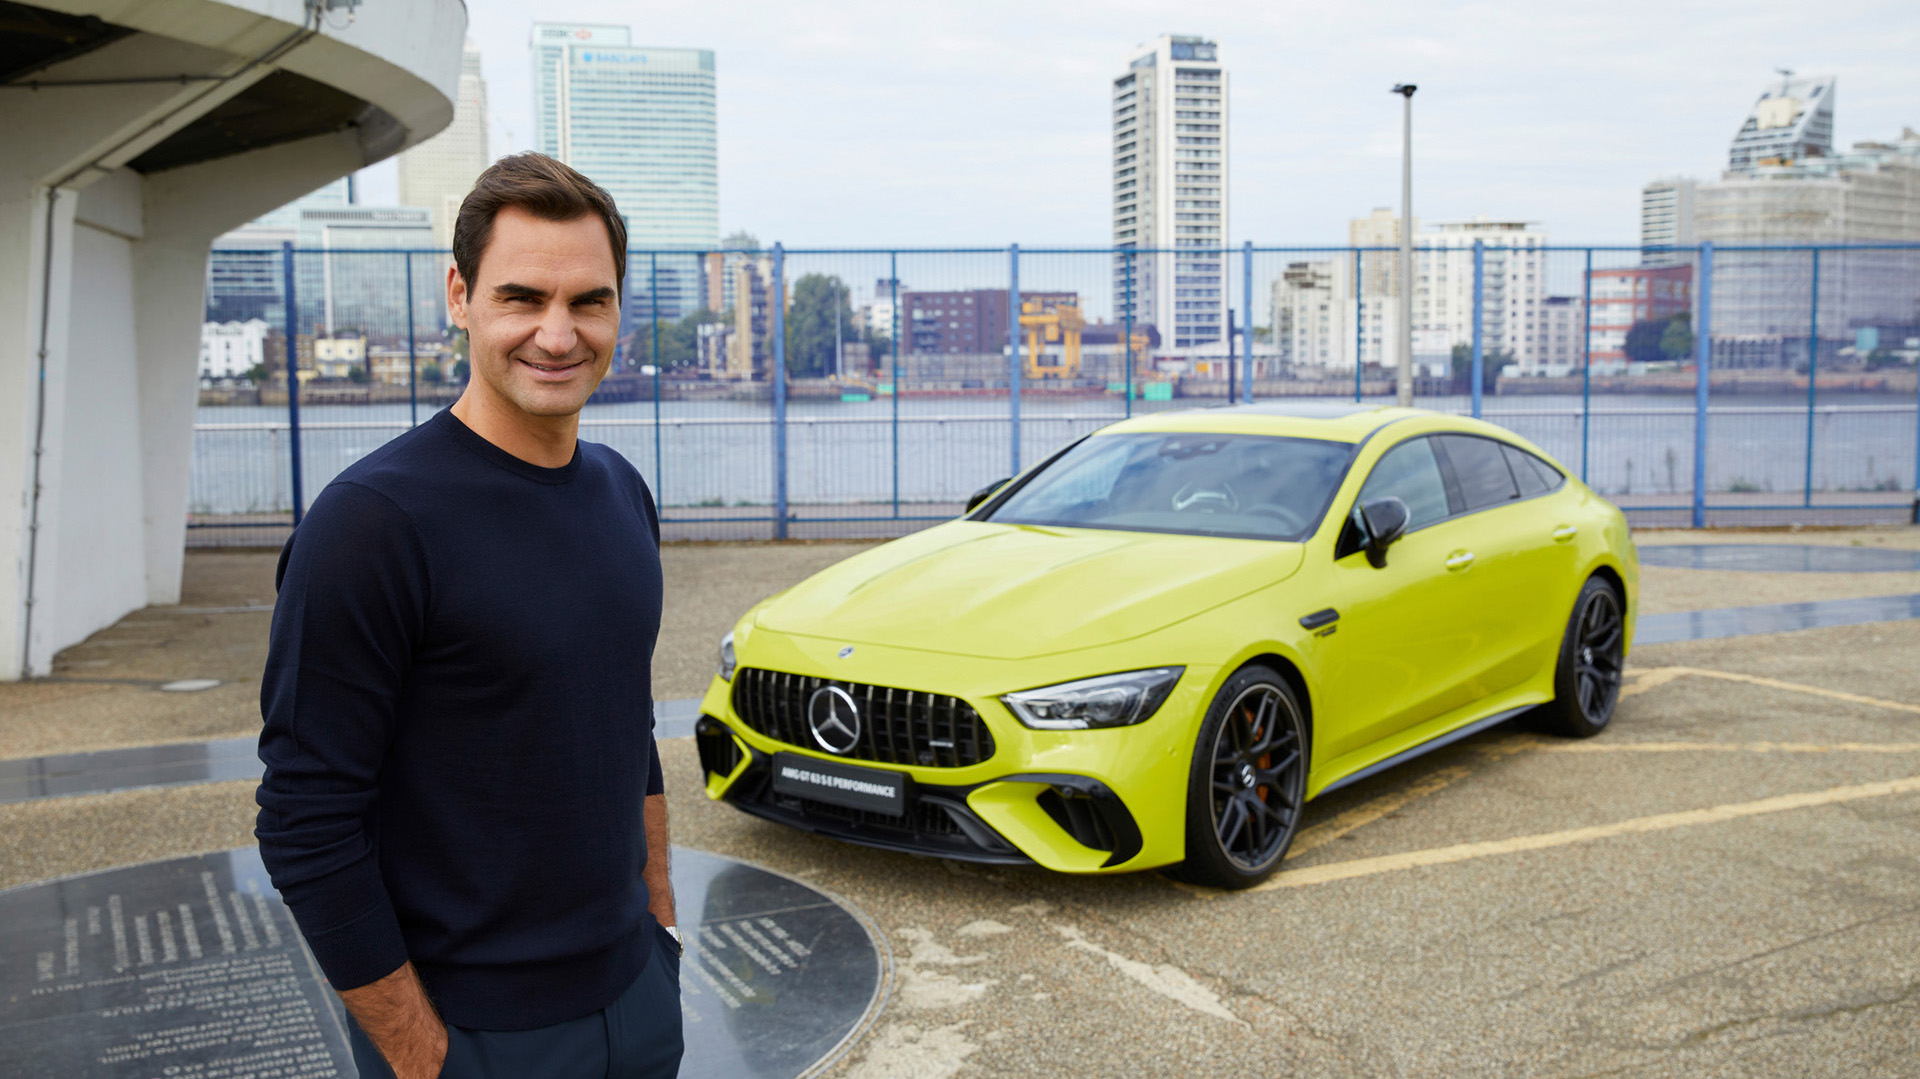 Roger Federer junto al Mercedes-AMG GT 63 S E Performance "one-off" que se subastará a fin de año para proyectos de beneficencia de tenis desde 2023